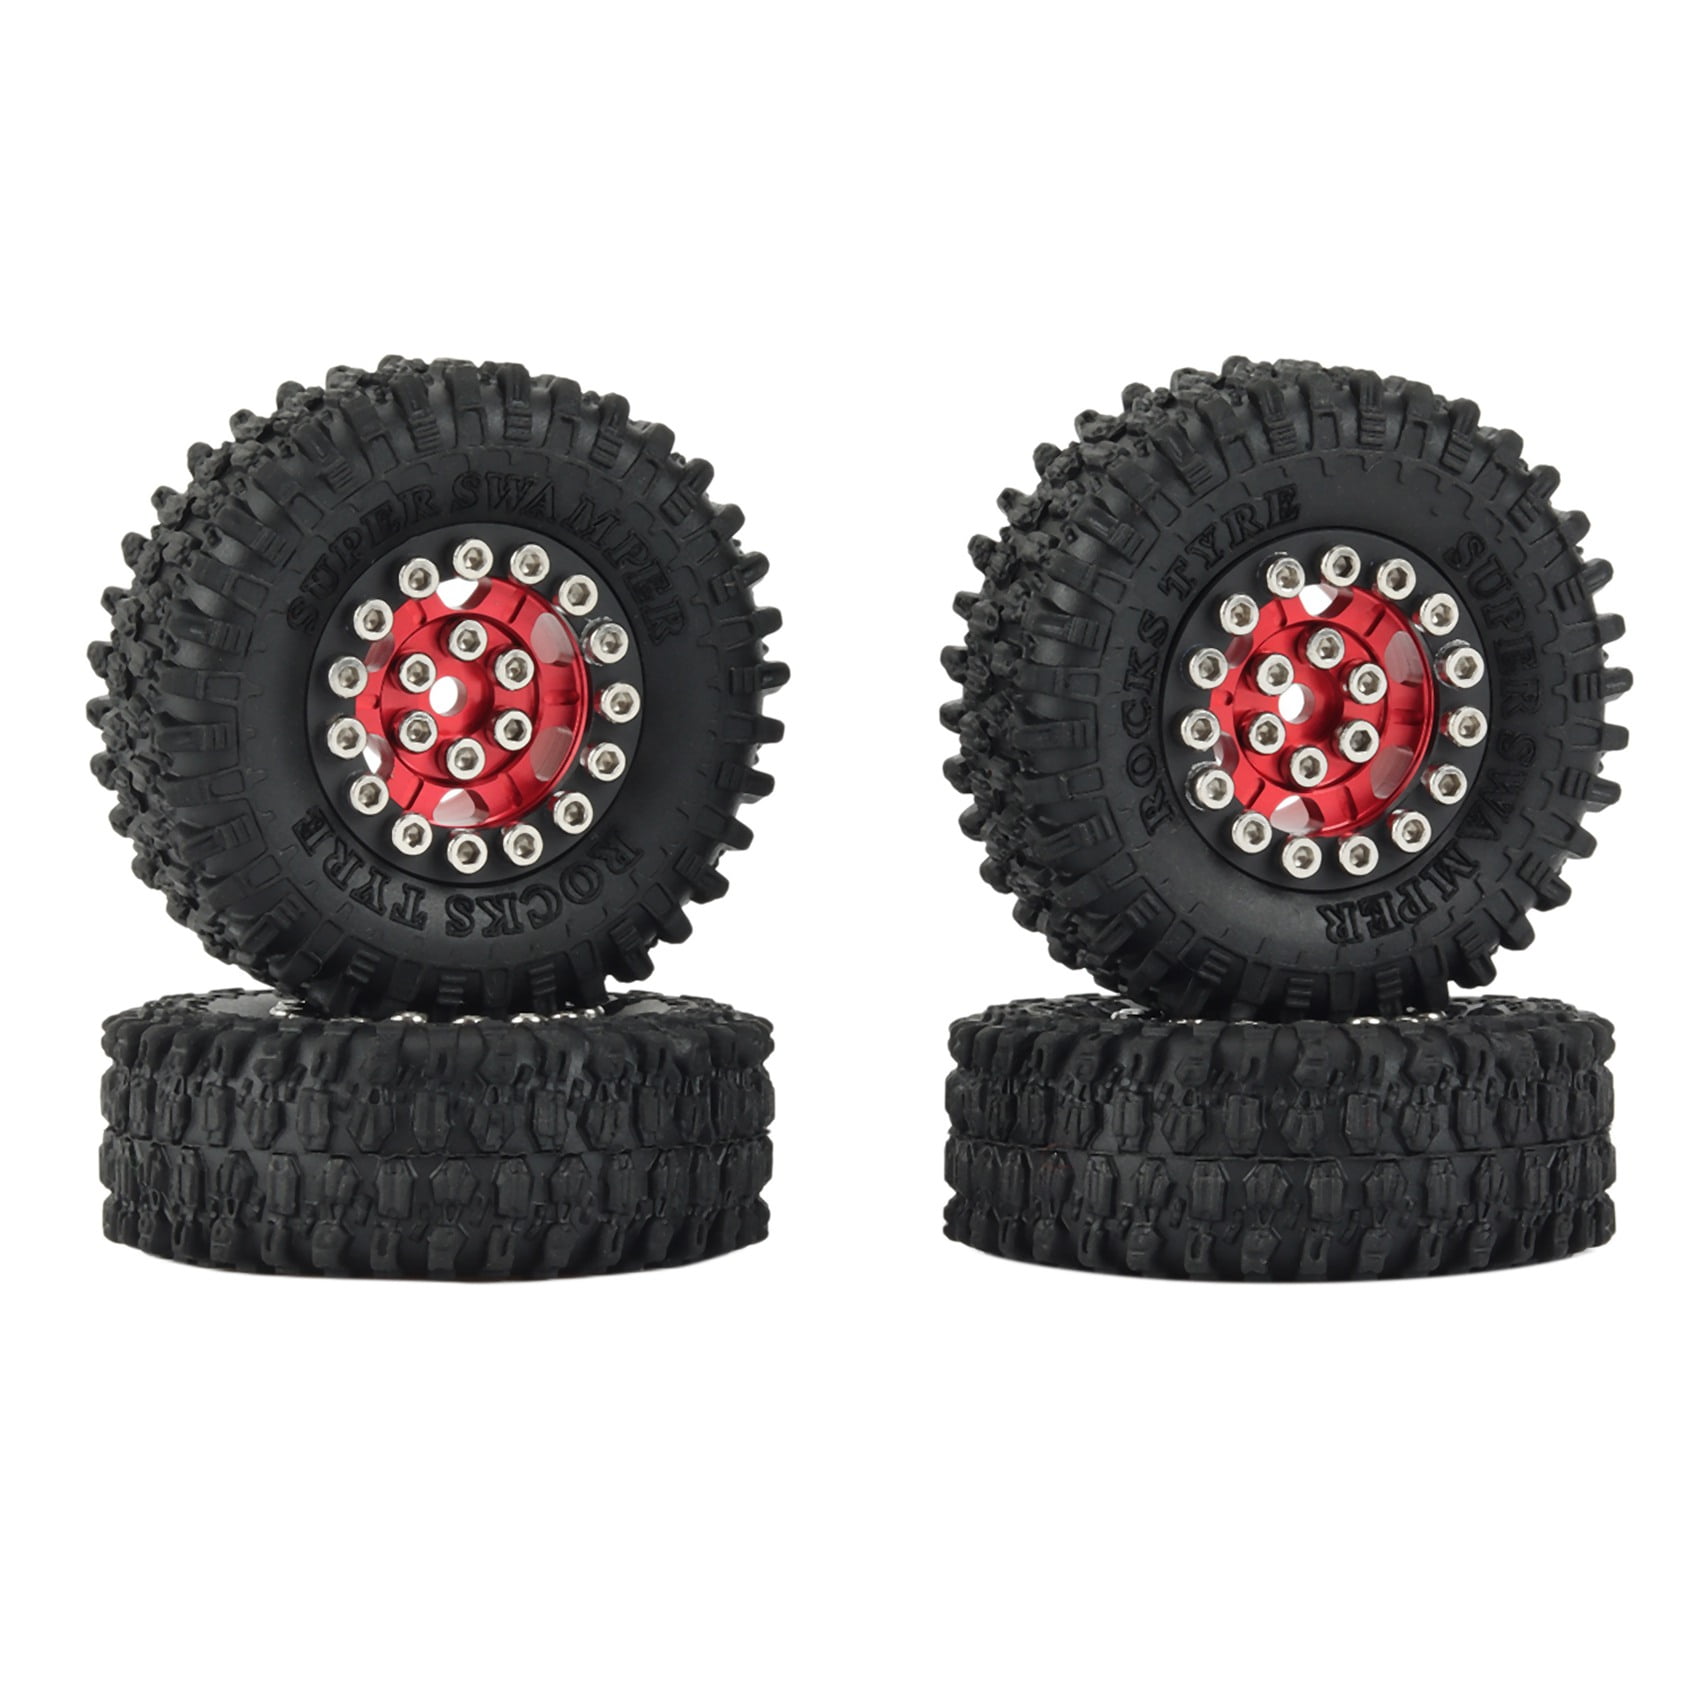 INJORA 1.0inch Crawler Tires 4pcs RC Rubber Wheel Tyres for 1:24 RC Crawler Axial SCX24 90081 AXI00001 AXI00002